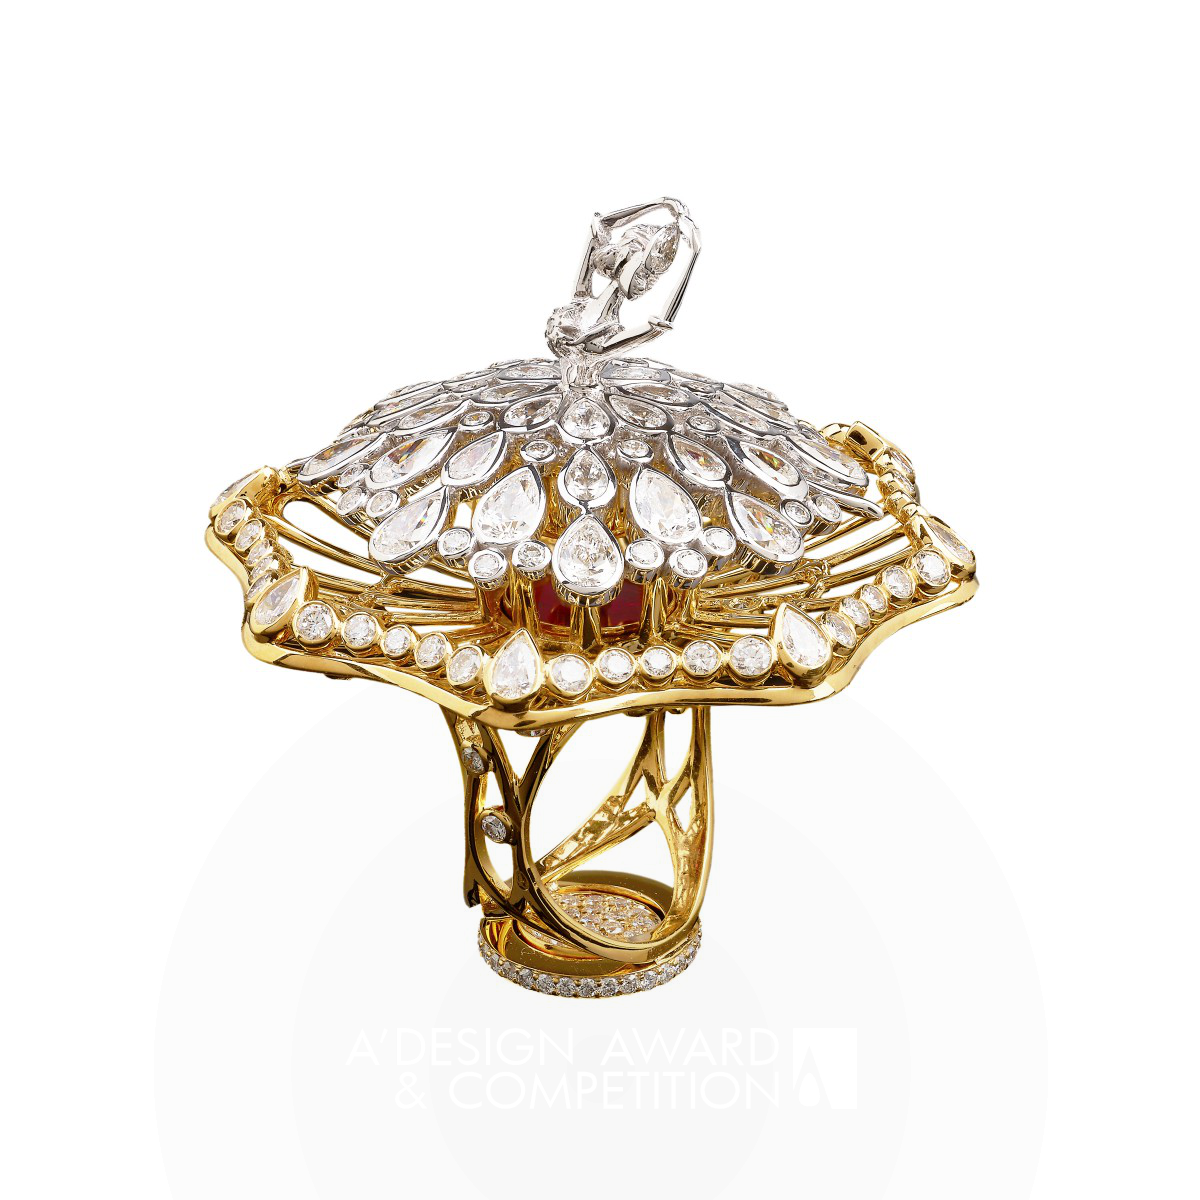 Dancing Ballerina  Kinetic Cocktail Ring by Margarita Prykhodko Silver Jewelry Design Award Winner 2021 